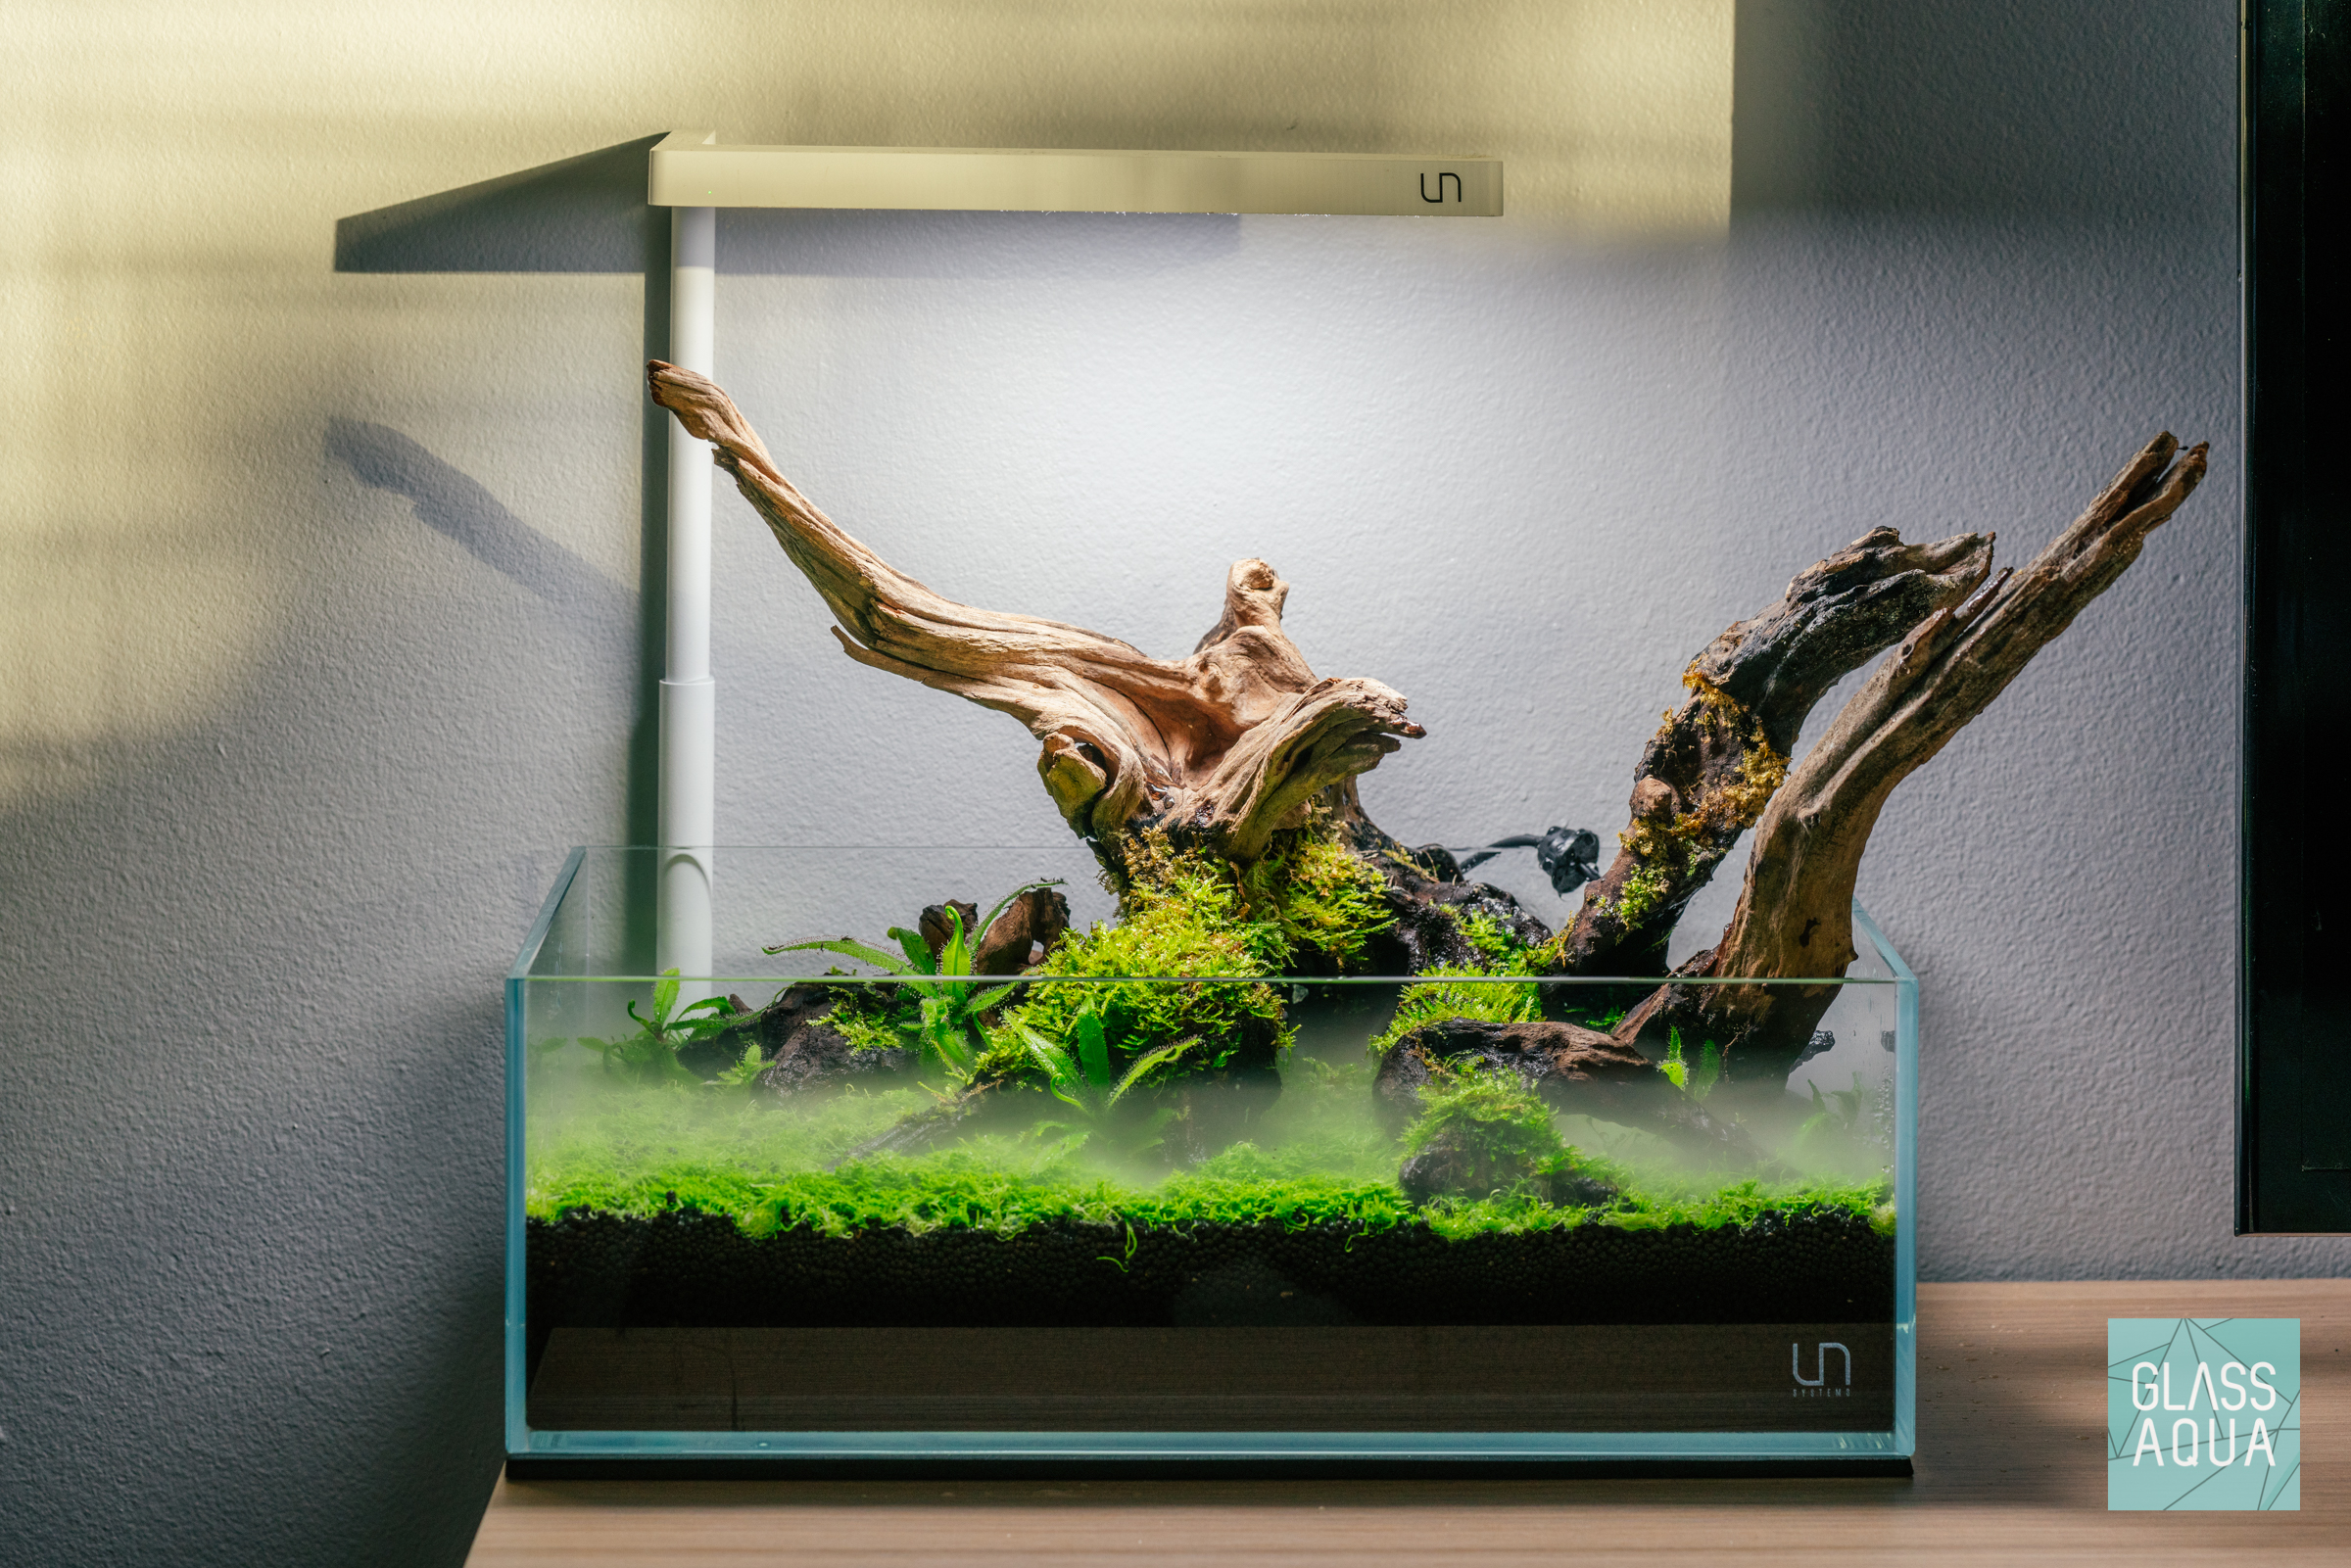 Ultum Nature Systems UNS 5S Shallow Rimless Glass Aquarium Fish Tank - Glass  Aqua